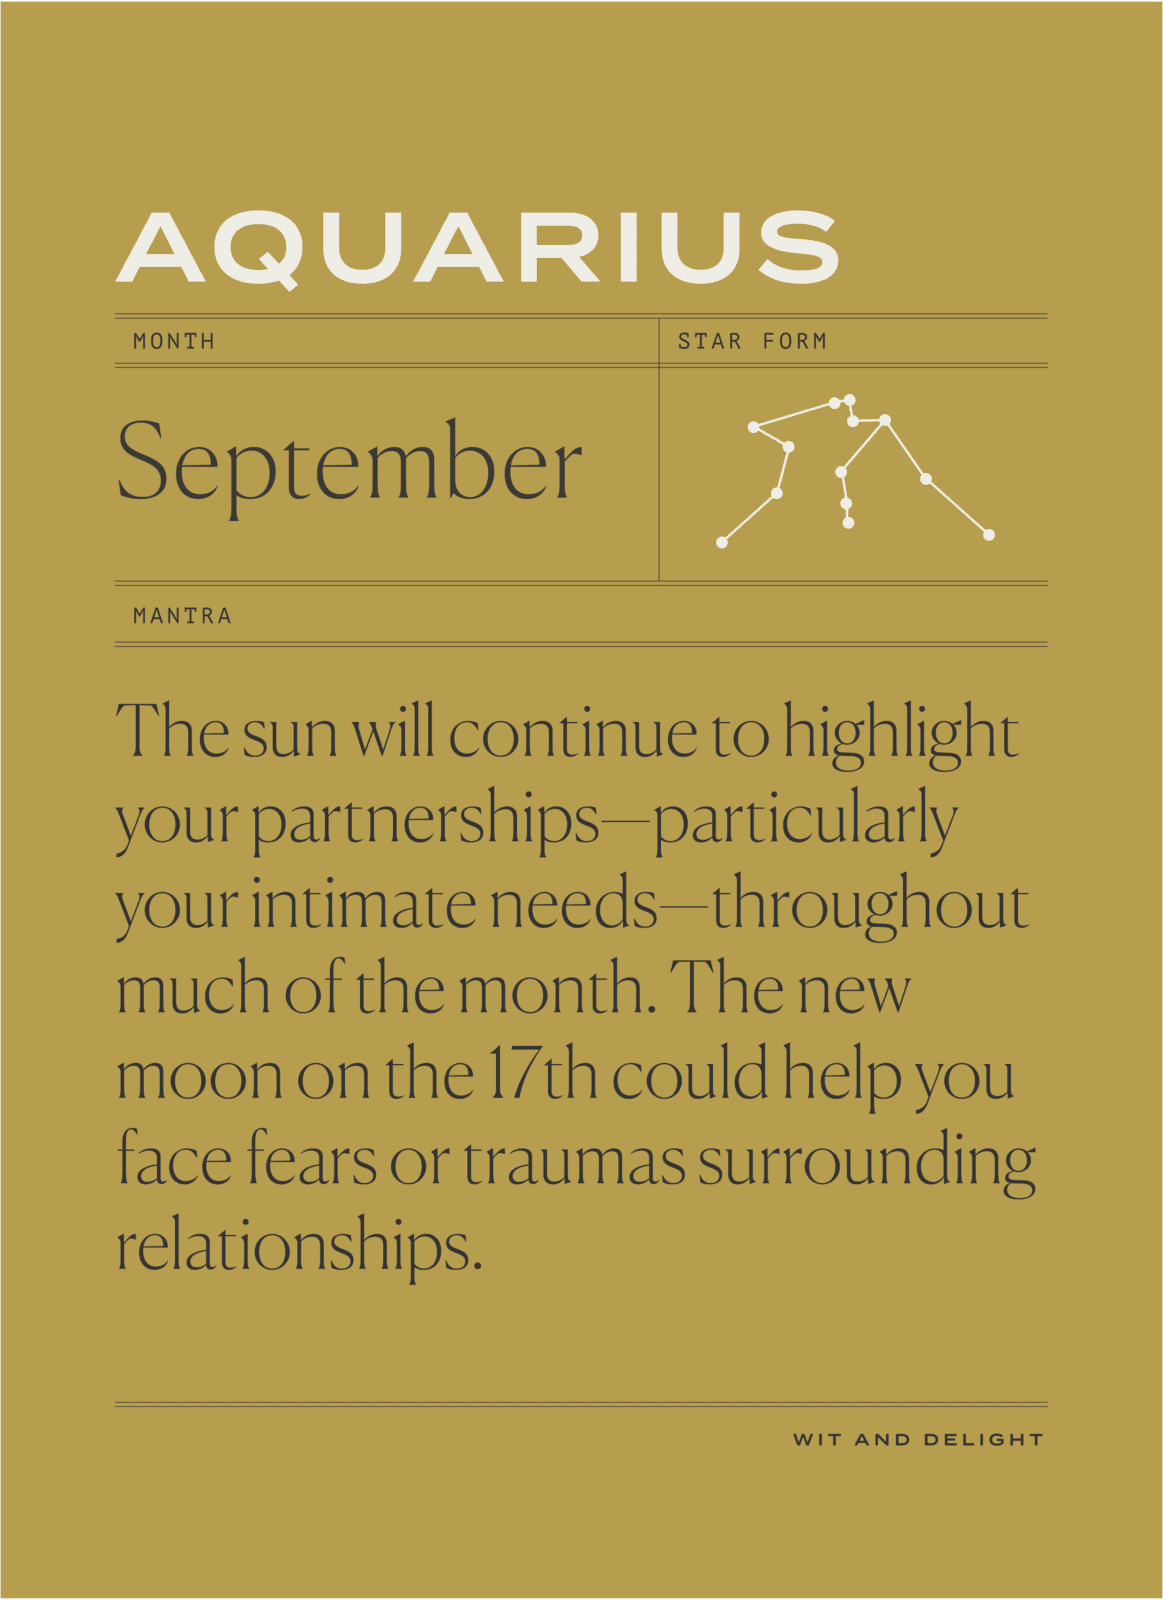 Aquarius September 2020 Horoscope | Wit & Delight